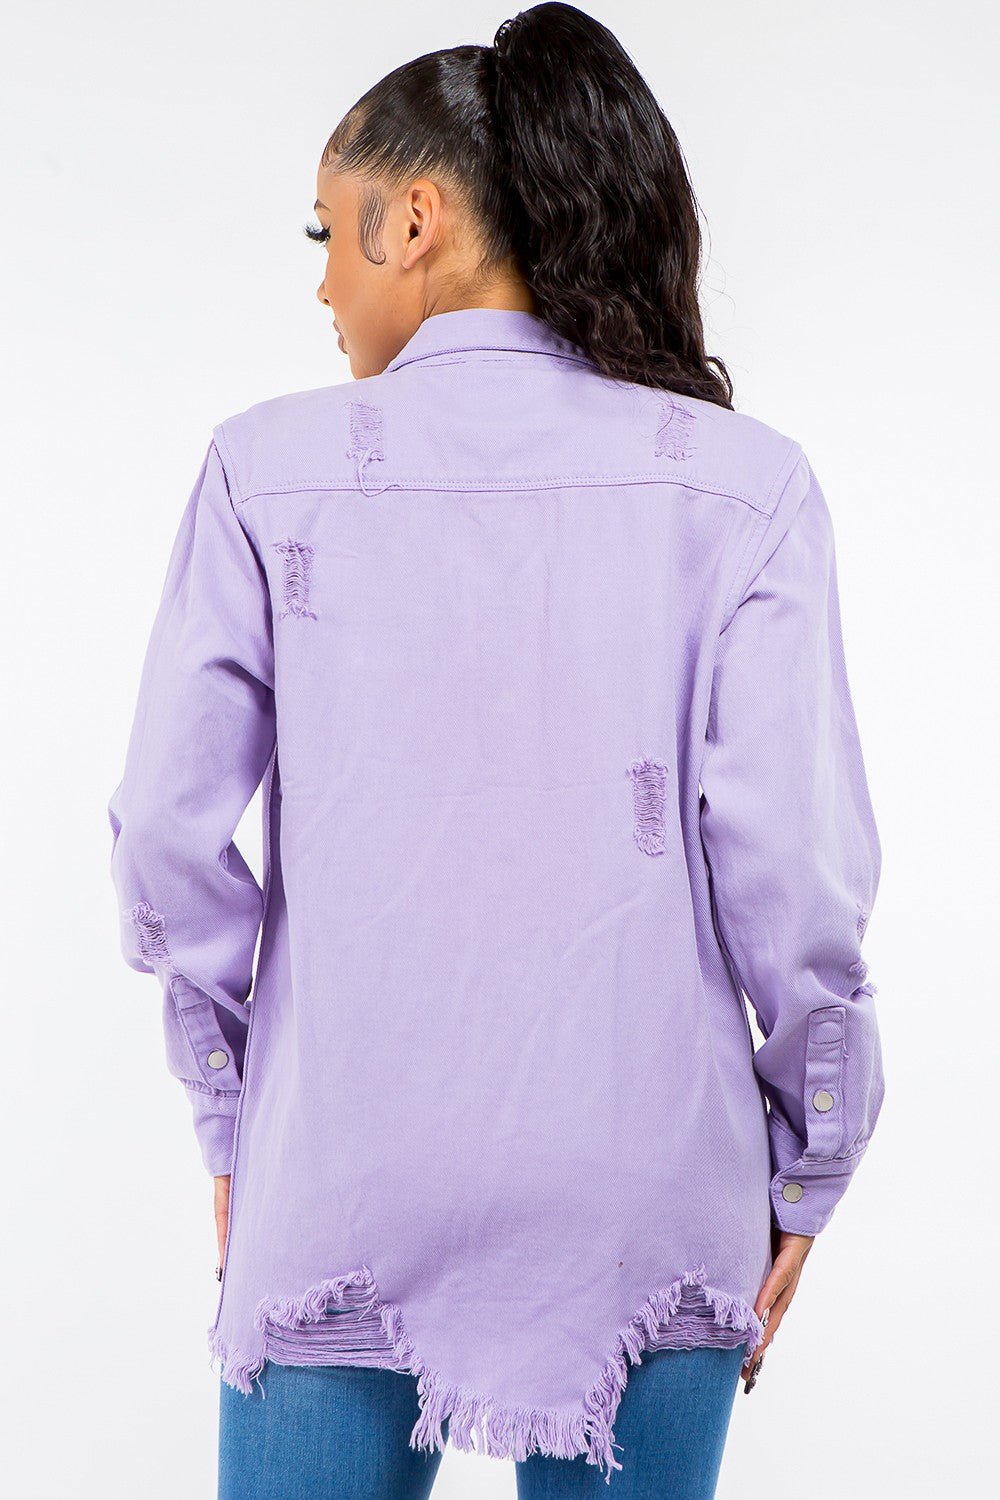 Frayed Hem Distressed Denim Jacket in LavenderJacketAmerican Bazi